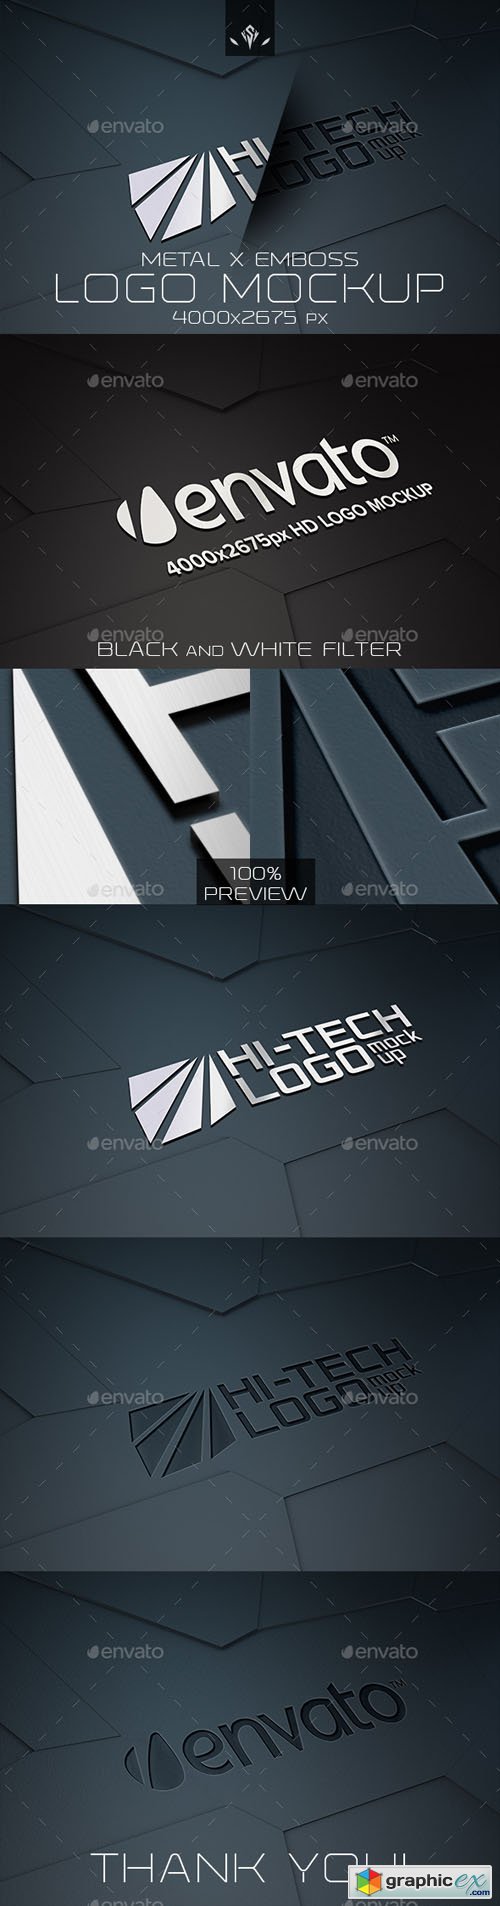 Hi-Tech Metal and Emboss Logo Mockup